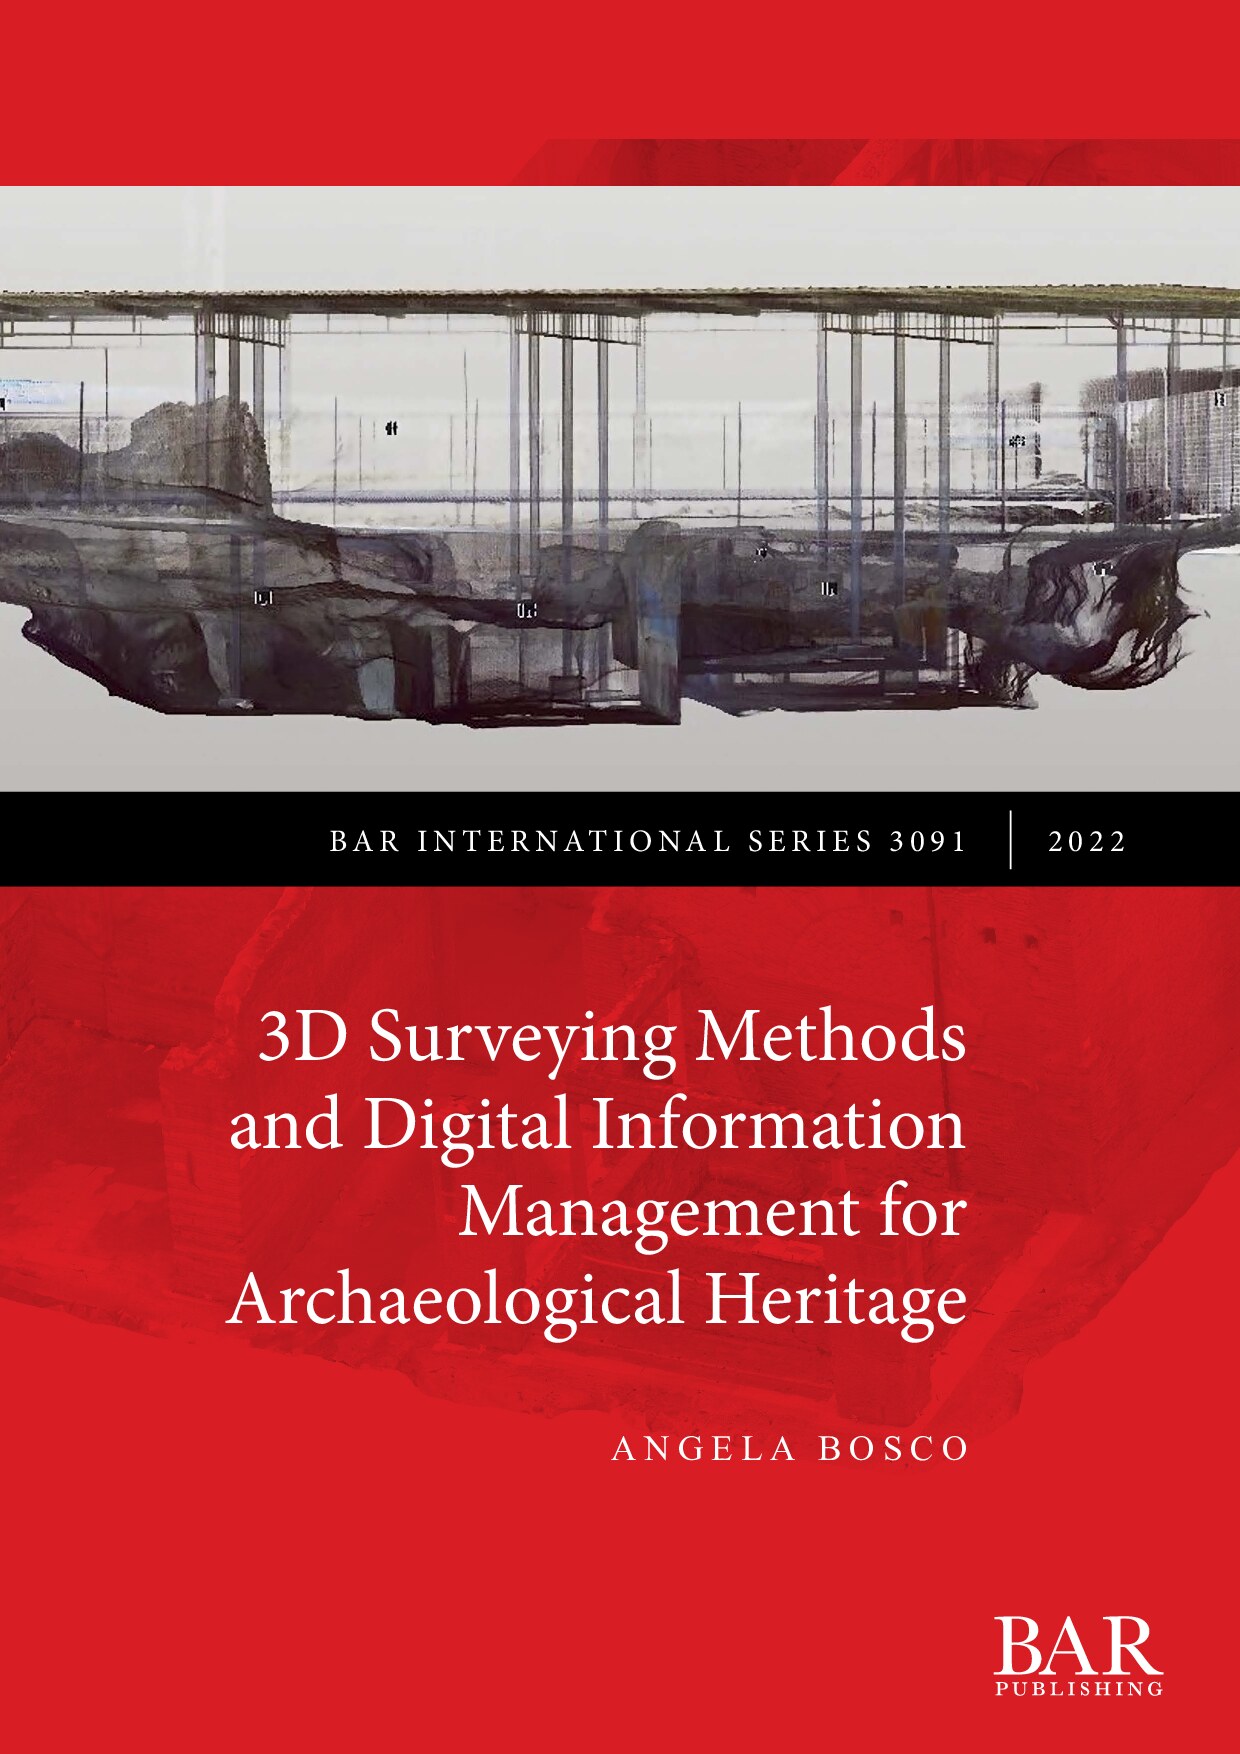 3D Surveying Methods and Digital Information Management for Archaeological Heritage 2022